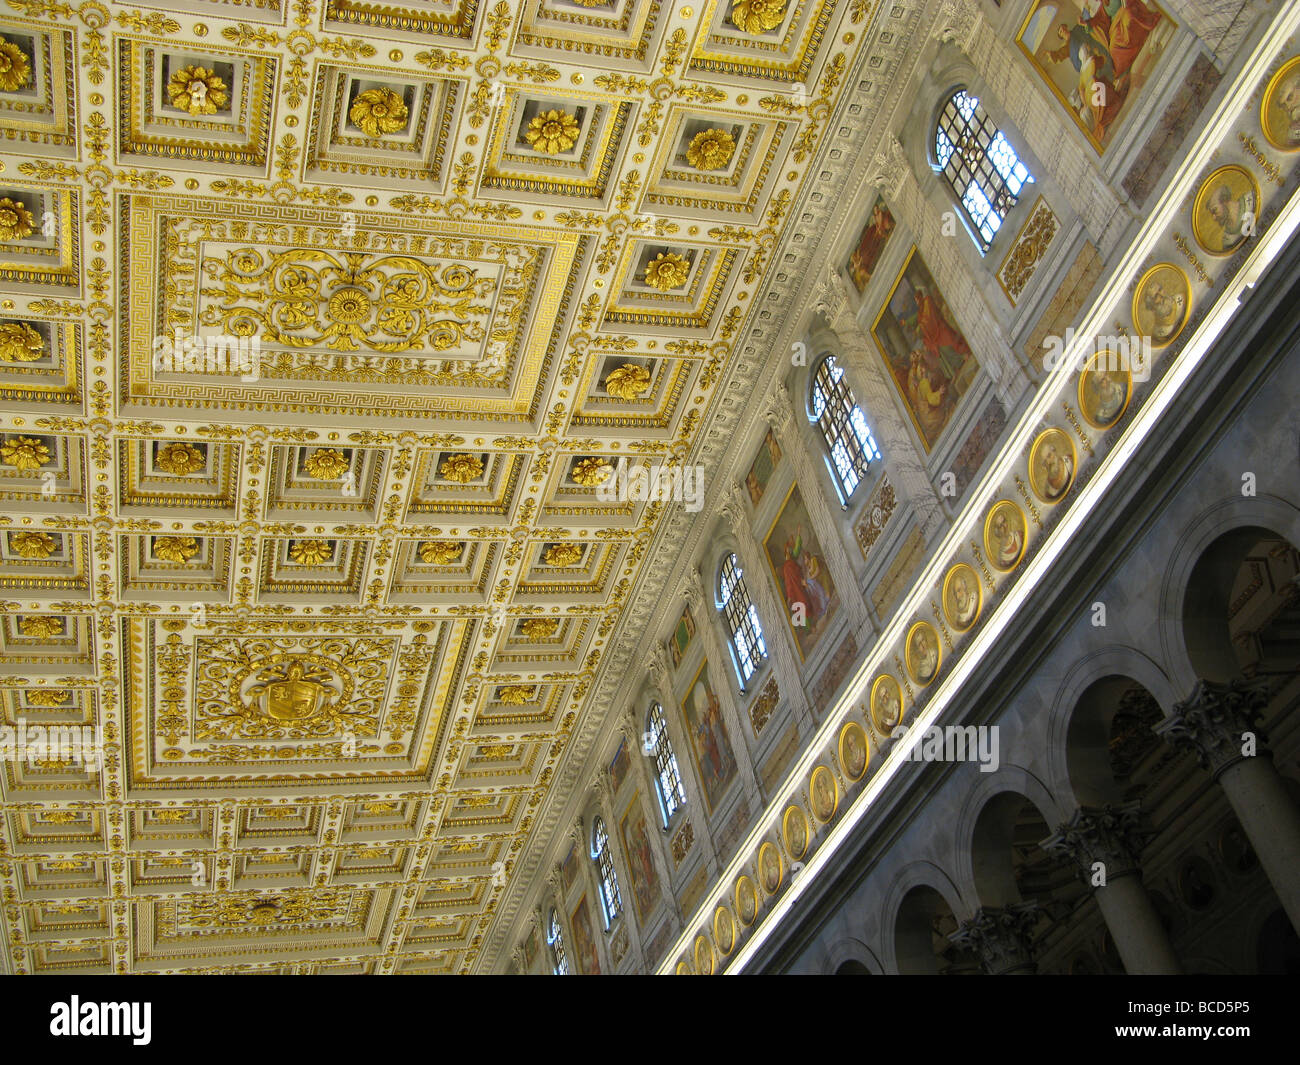 gold-ceiling-in-saint-pauls-basilica-rome-italy-BCD5P5.jpg